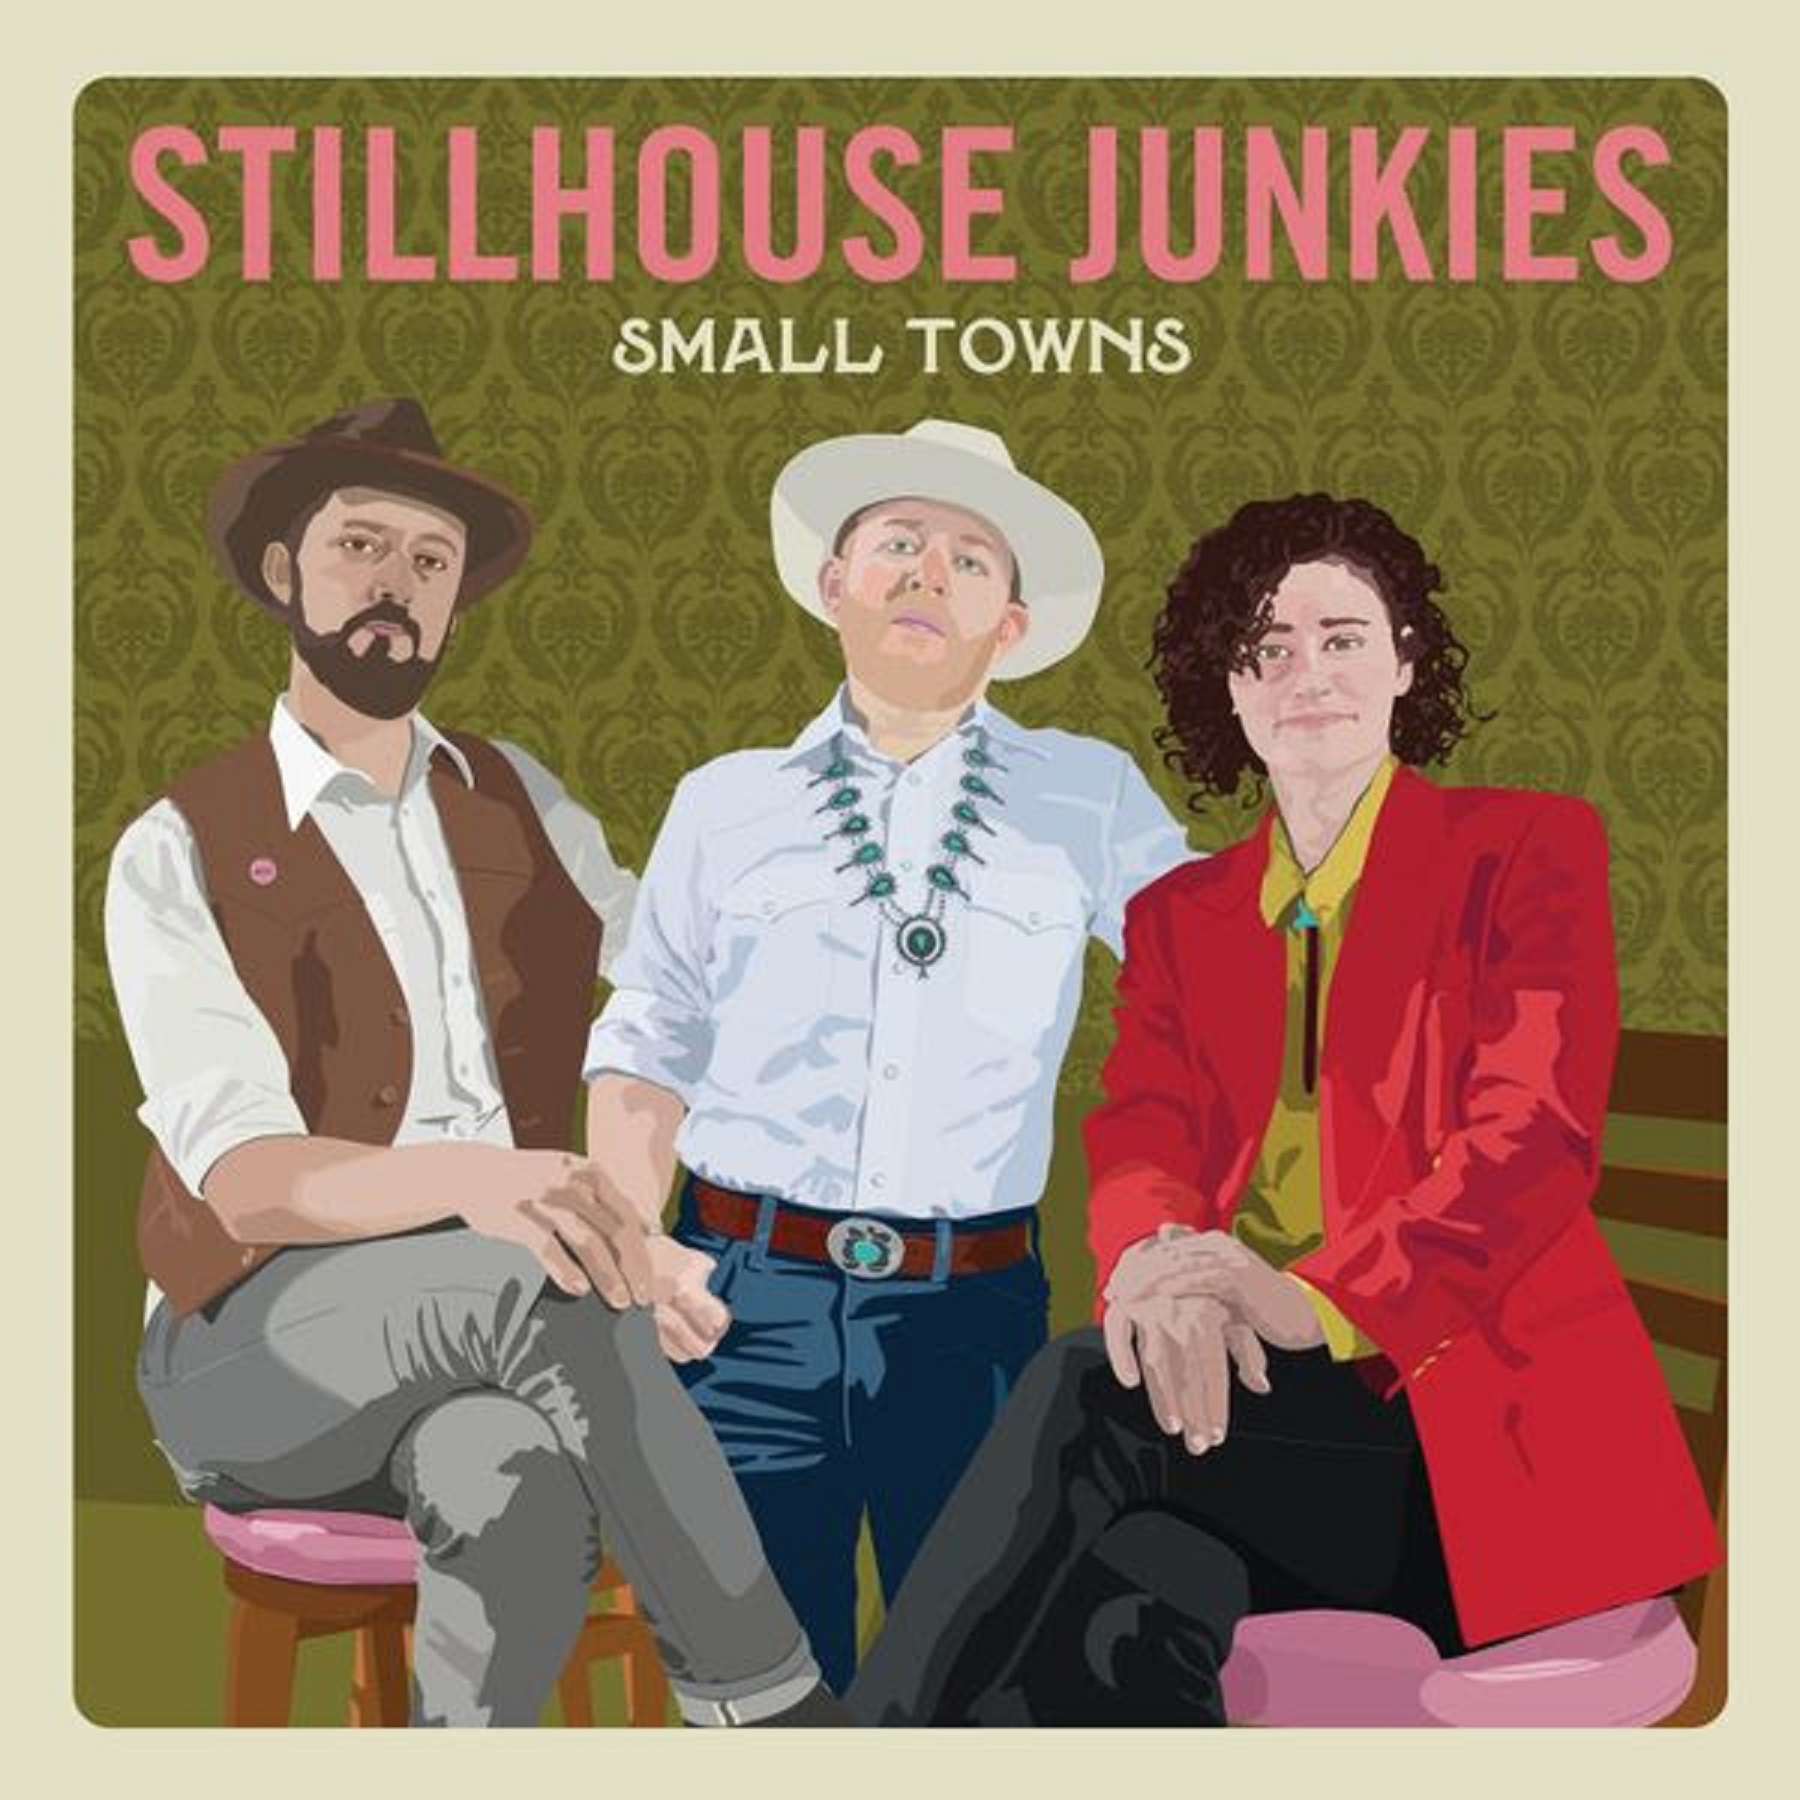 Stillhouse Junkies release new album Small Towns